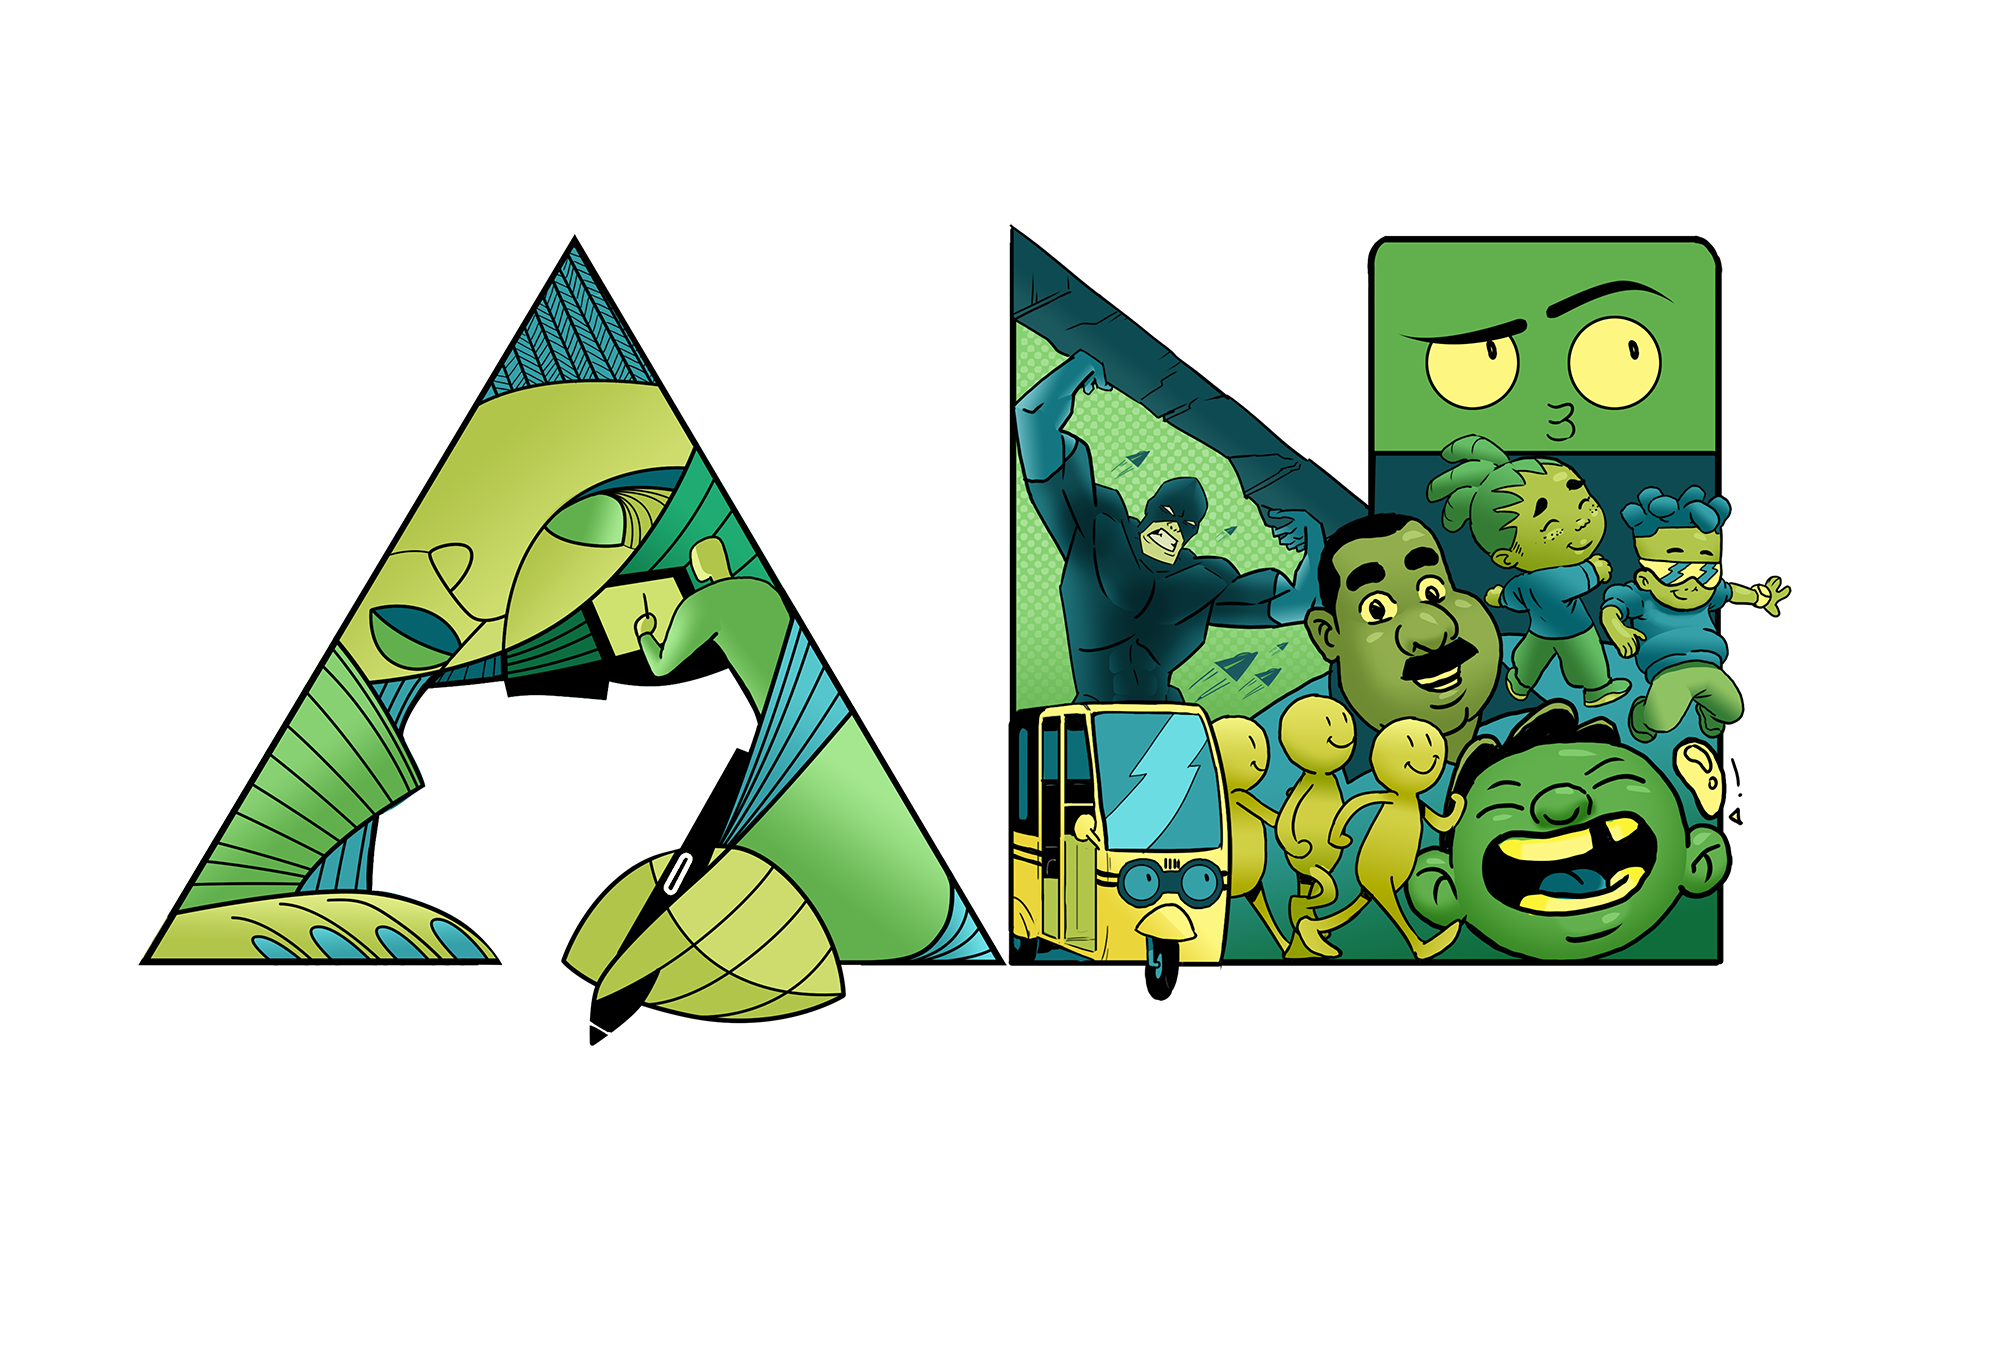 Animation Nigeria